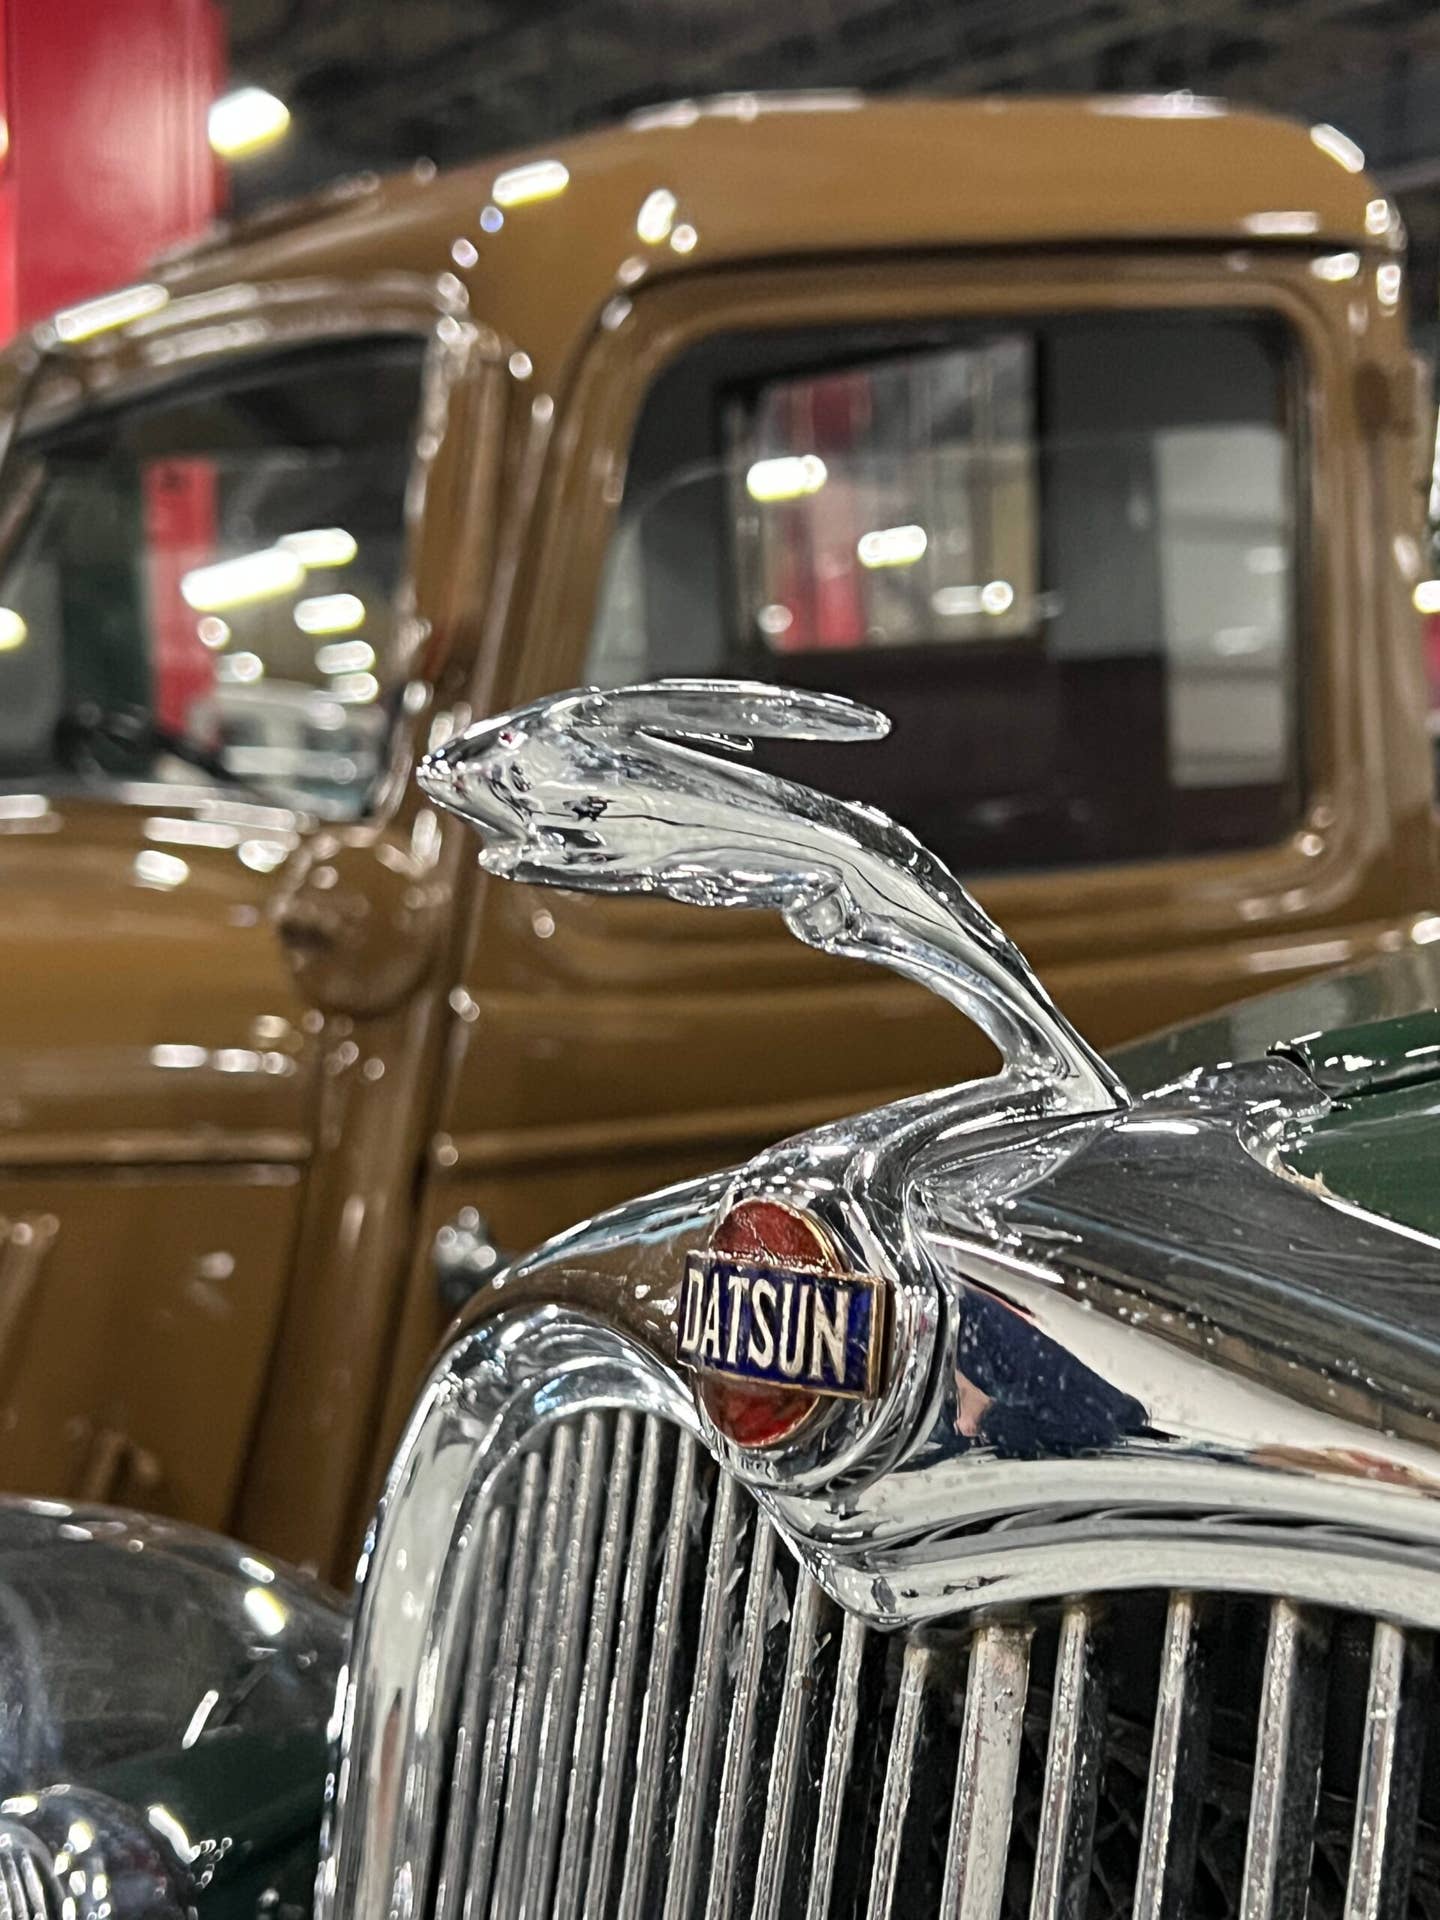 Datsun "dashing rabbit" hood ornament on an early pickup truck.